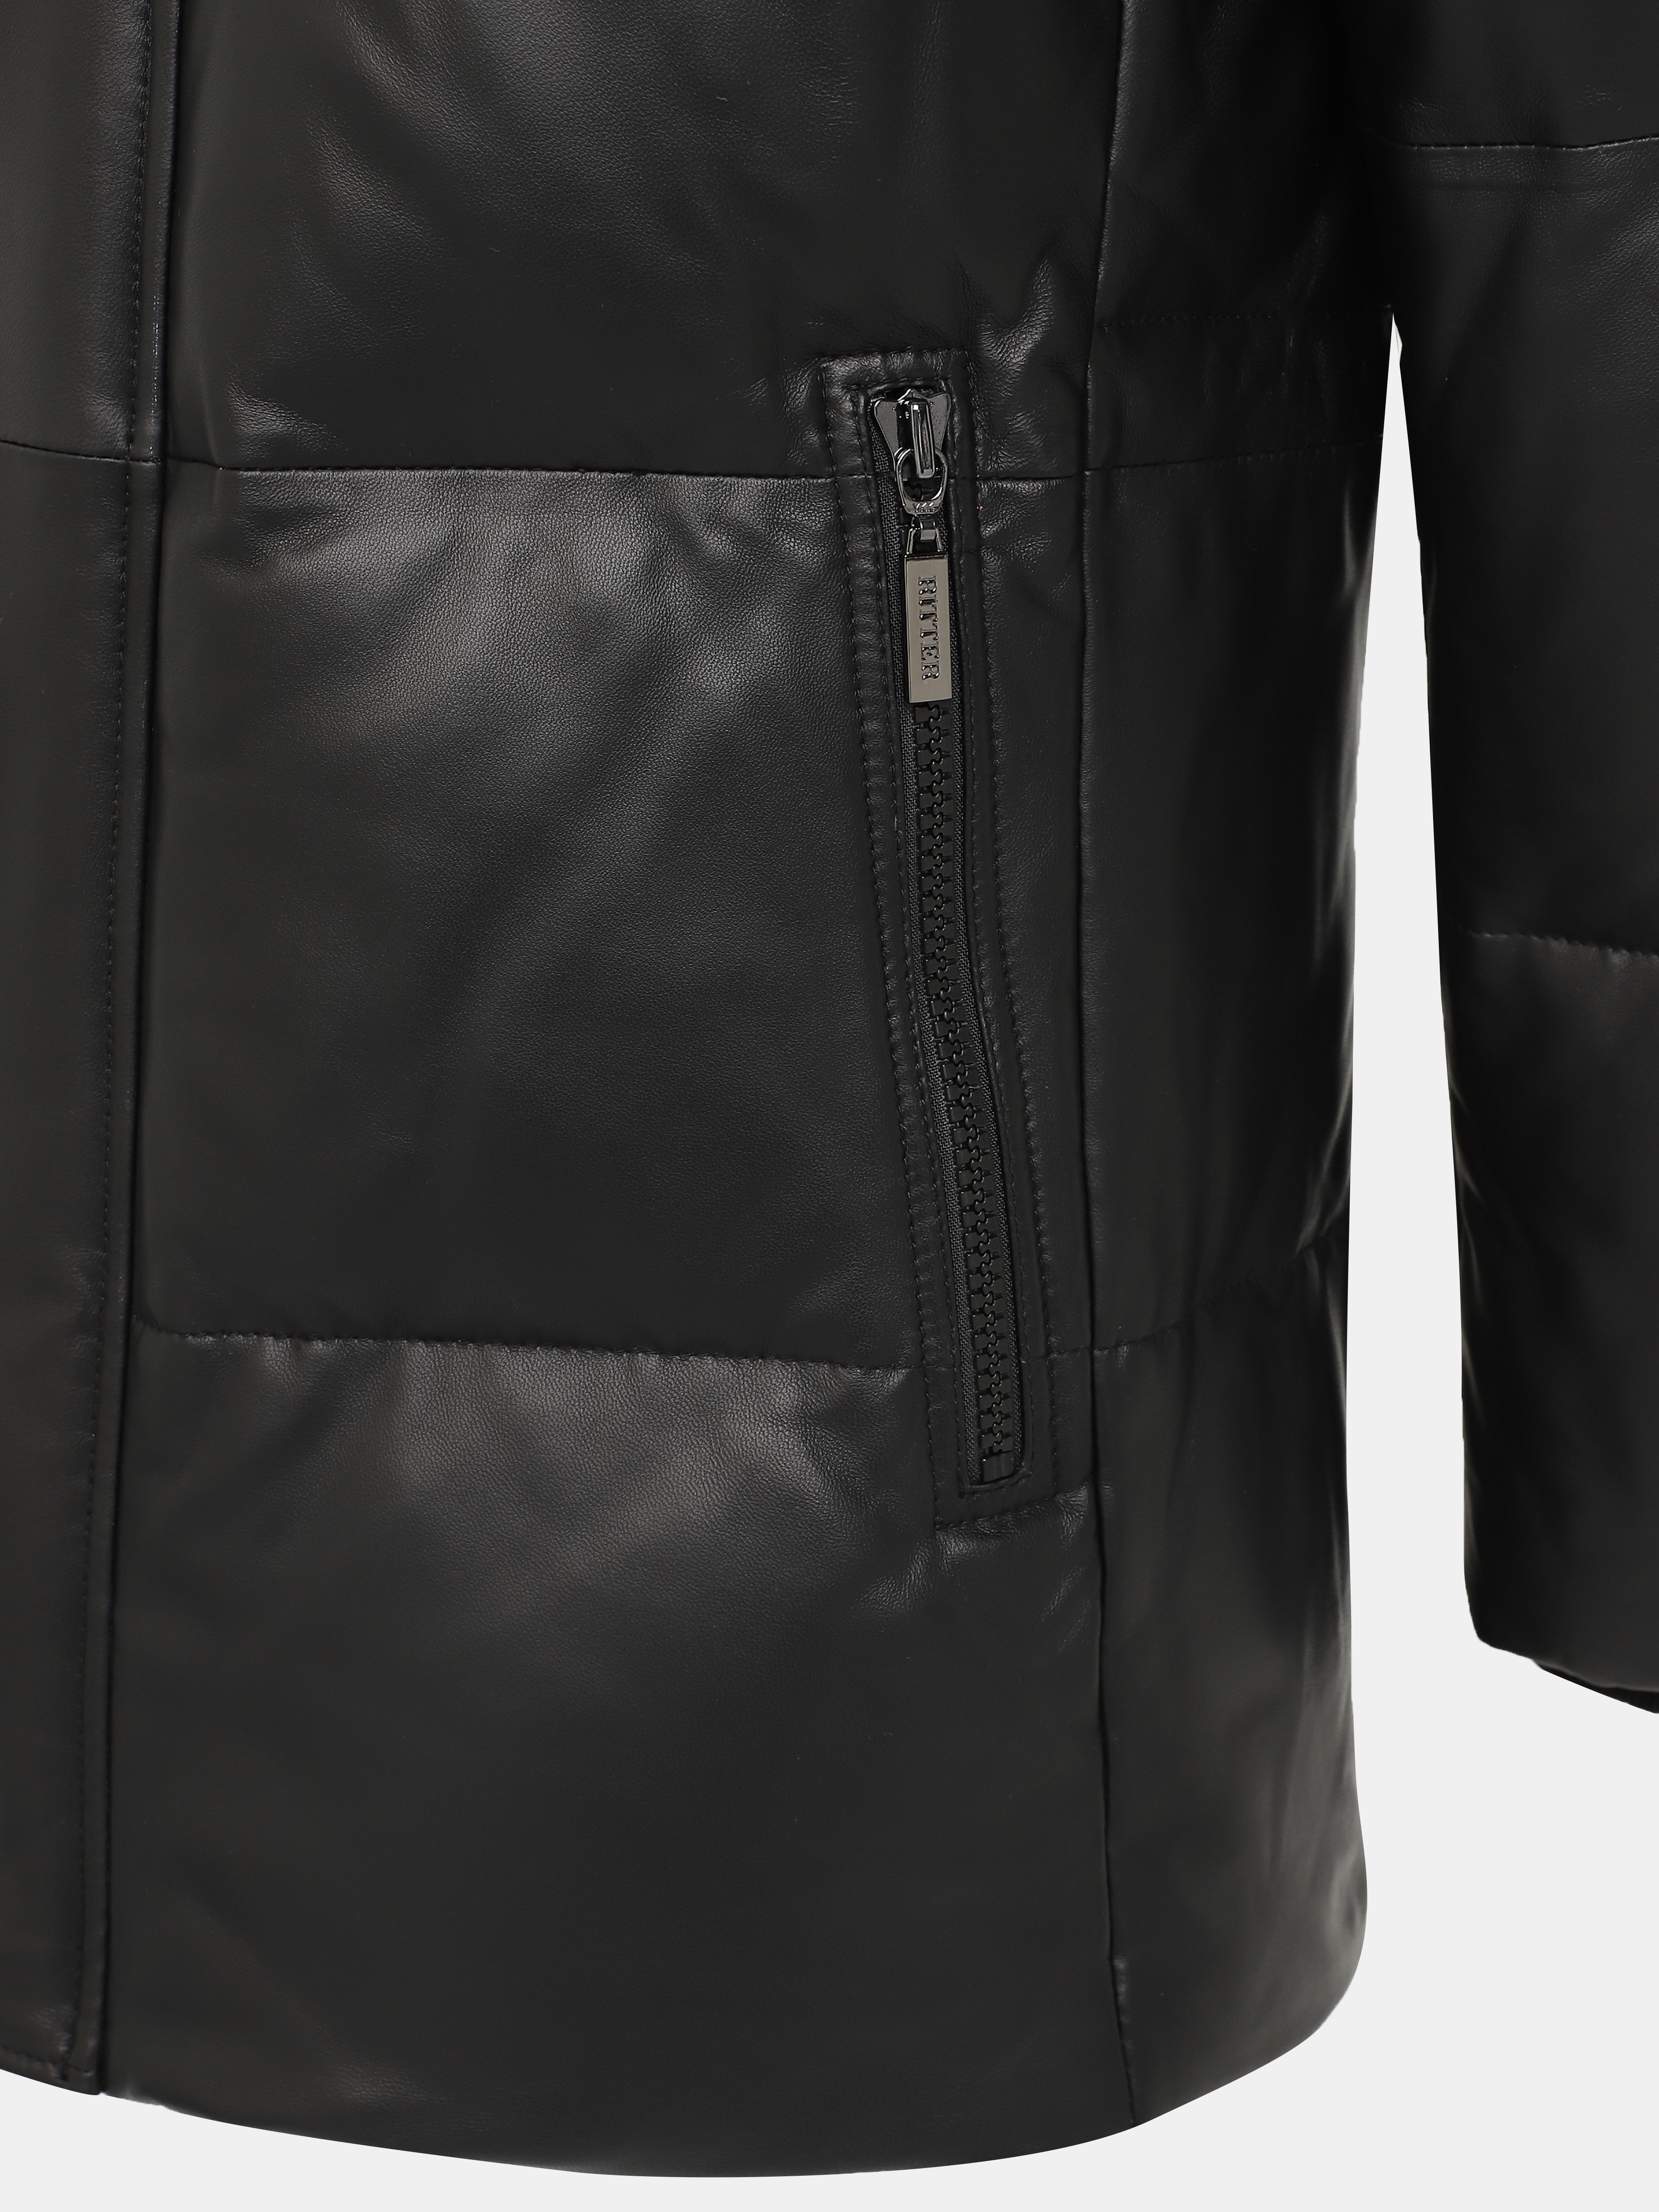 Кожаная куртка Ritter 390990-032, цвет черный, размер 62 - фото 2